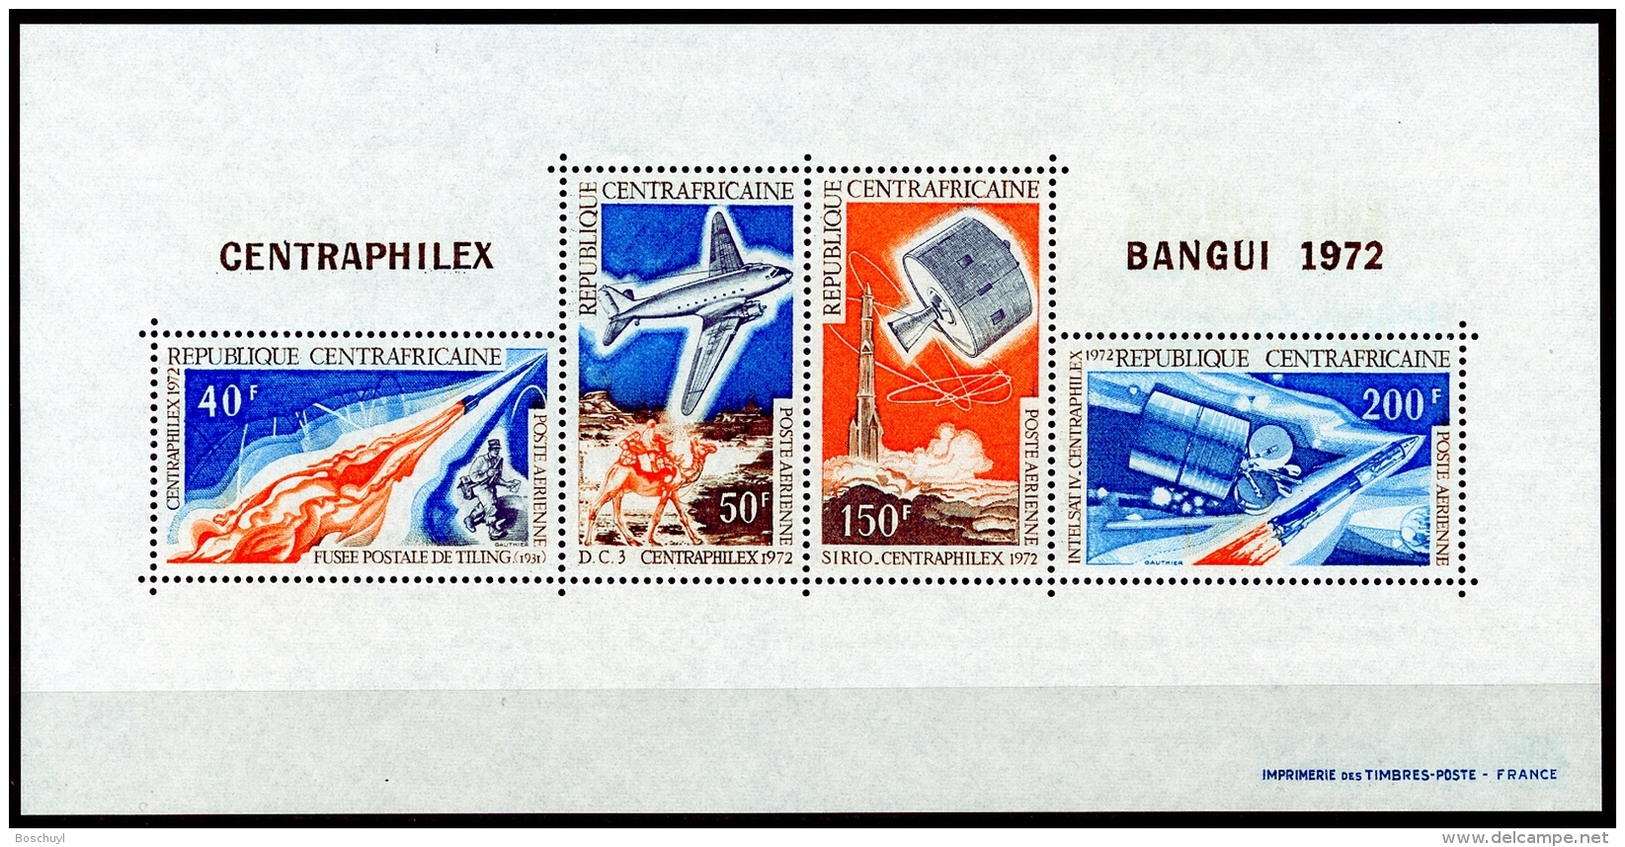 Central African Republic, 1972, Space, Airplane, Centraphilex Stamp Exhibition, MNH Sheet, Michel Block 7 - Zentralafrik. Republik